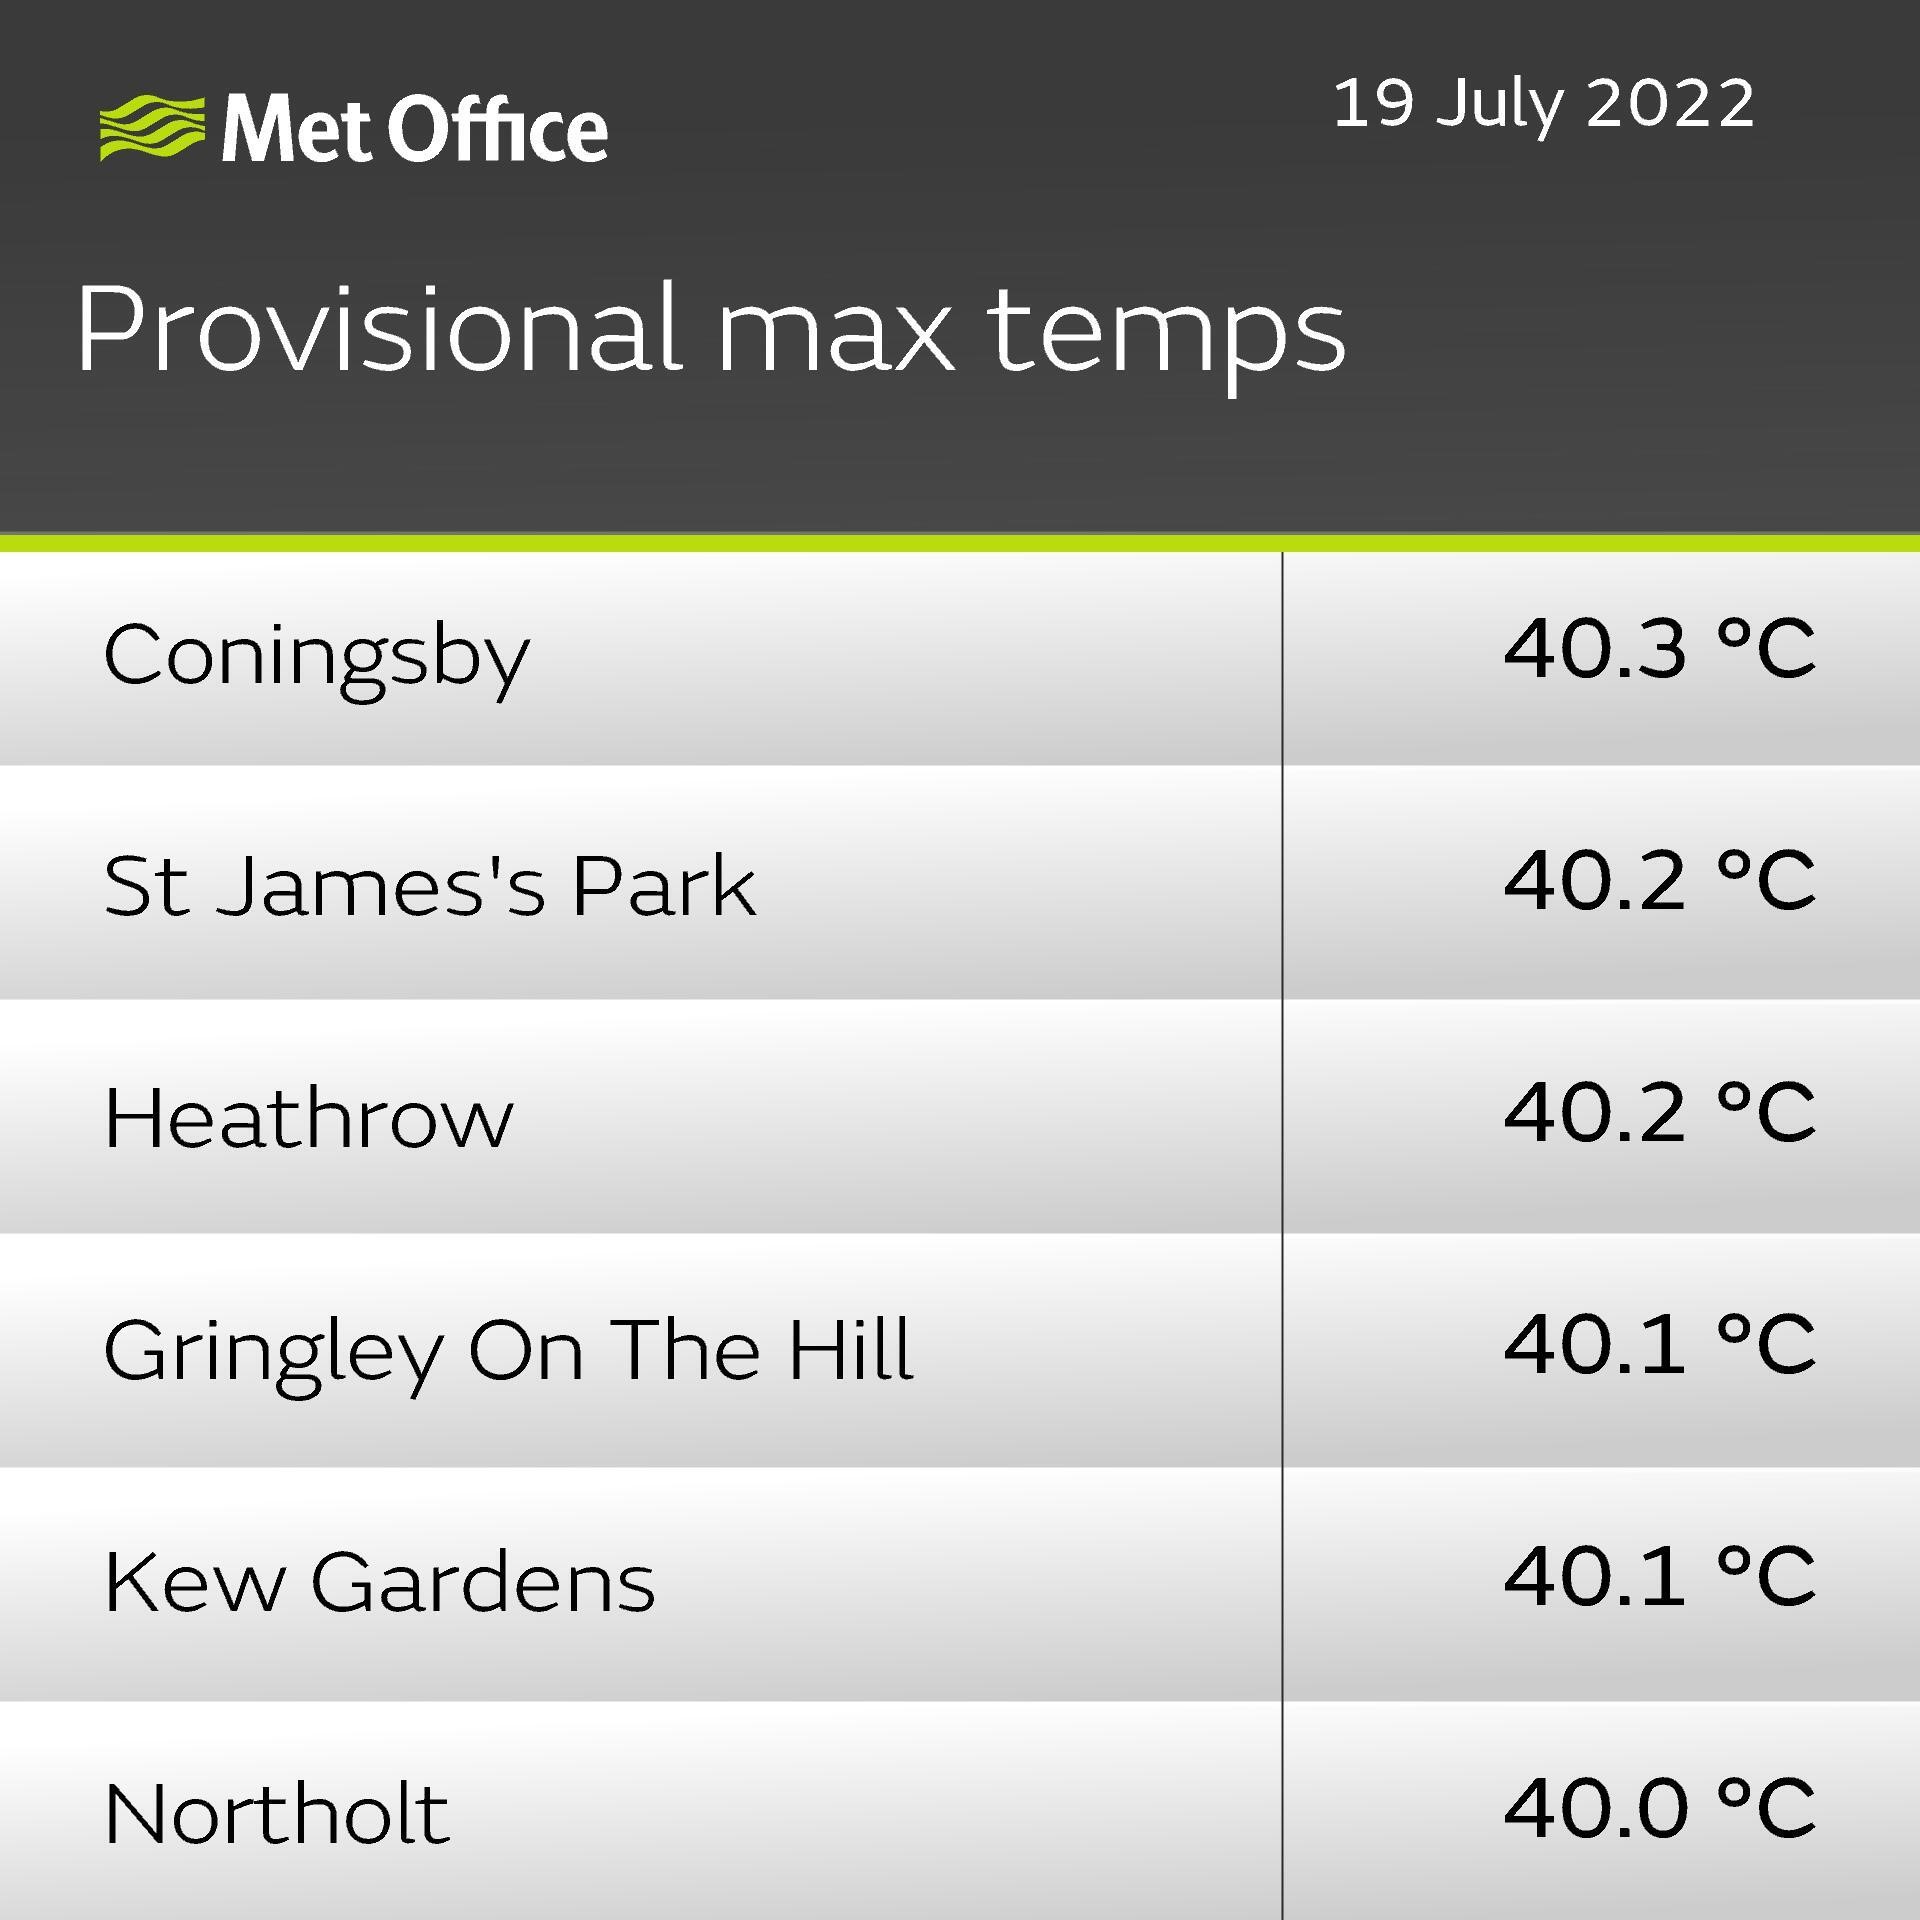 Provision max temperatures across the UK.